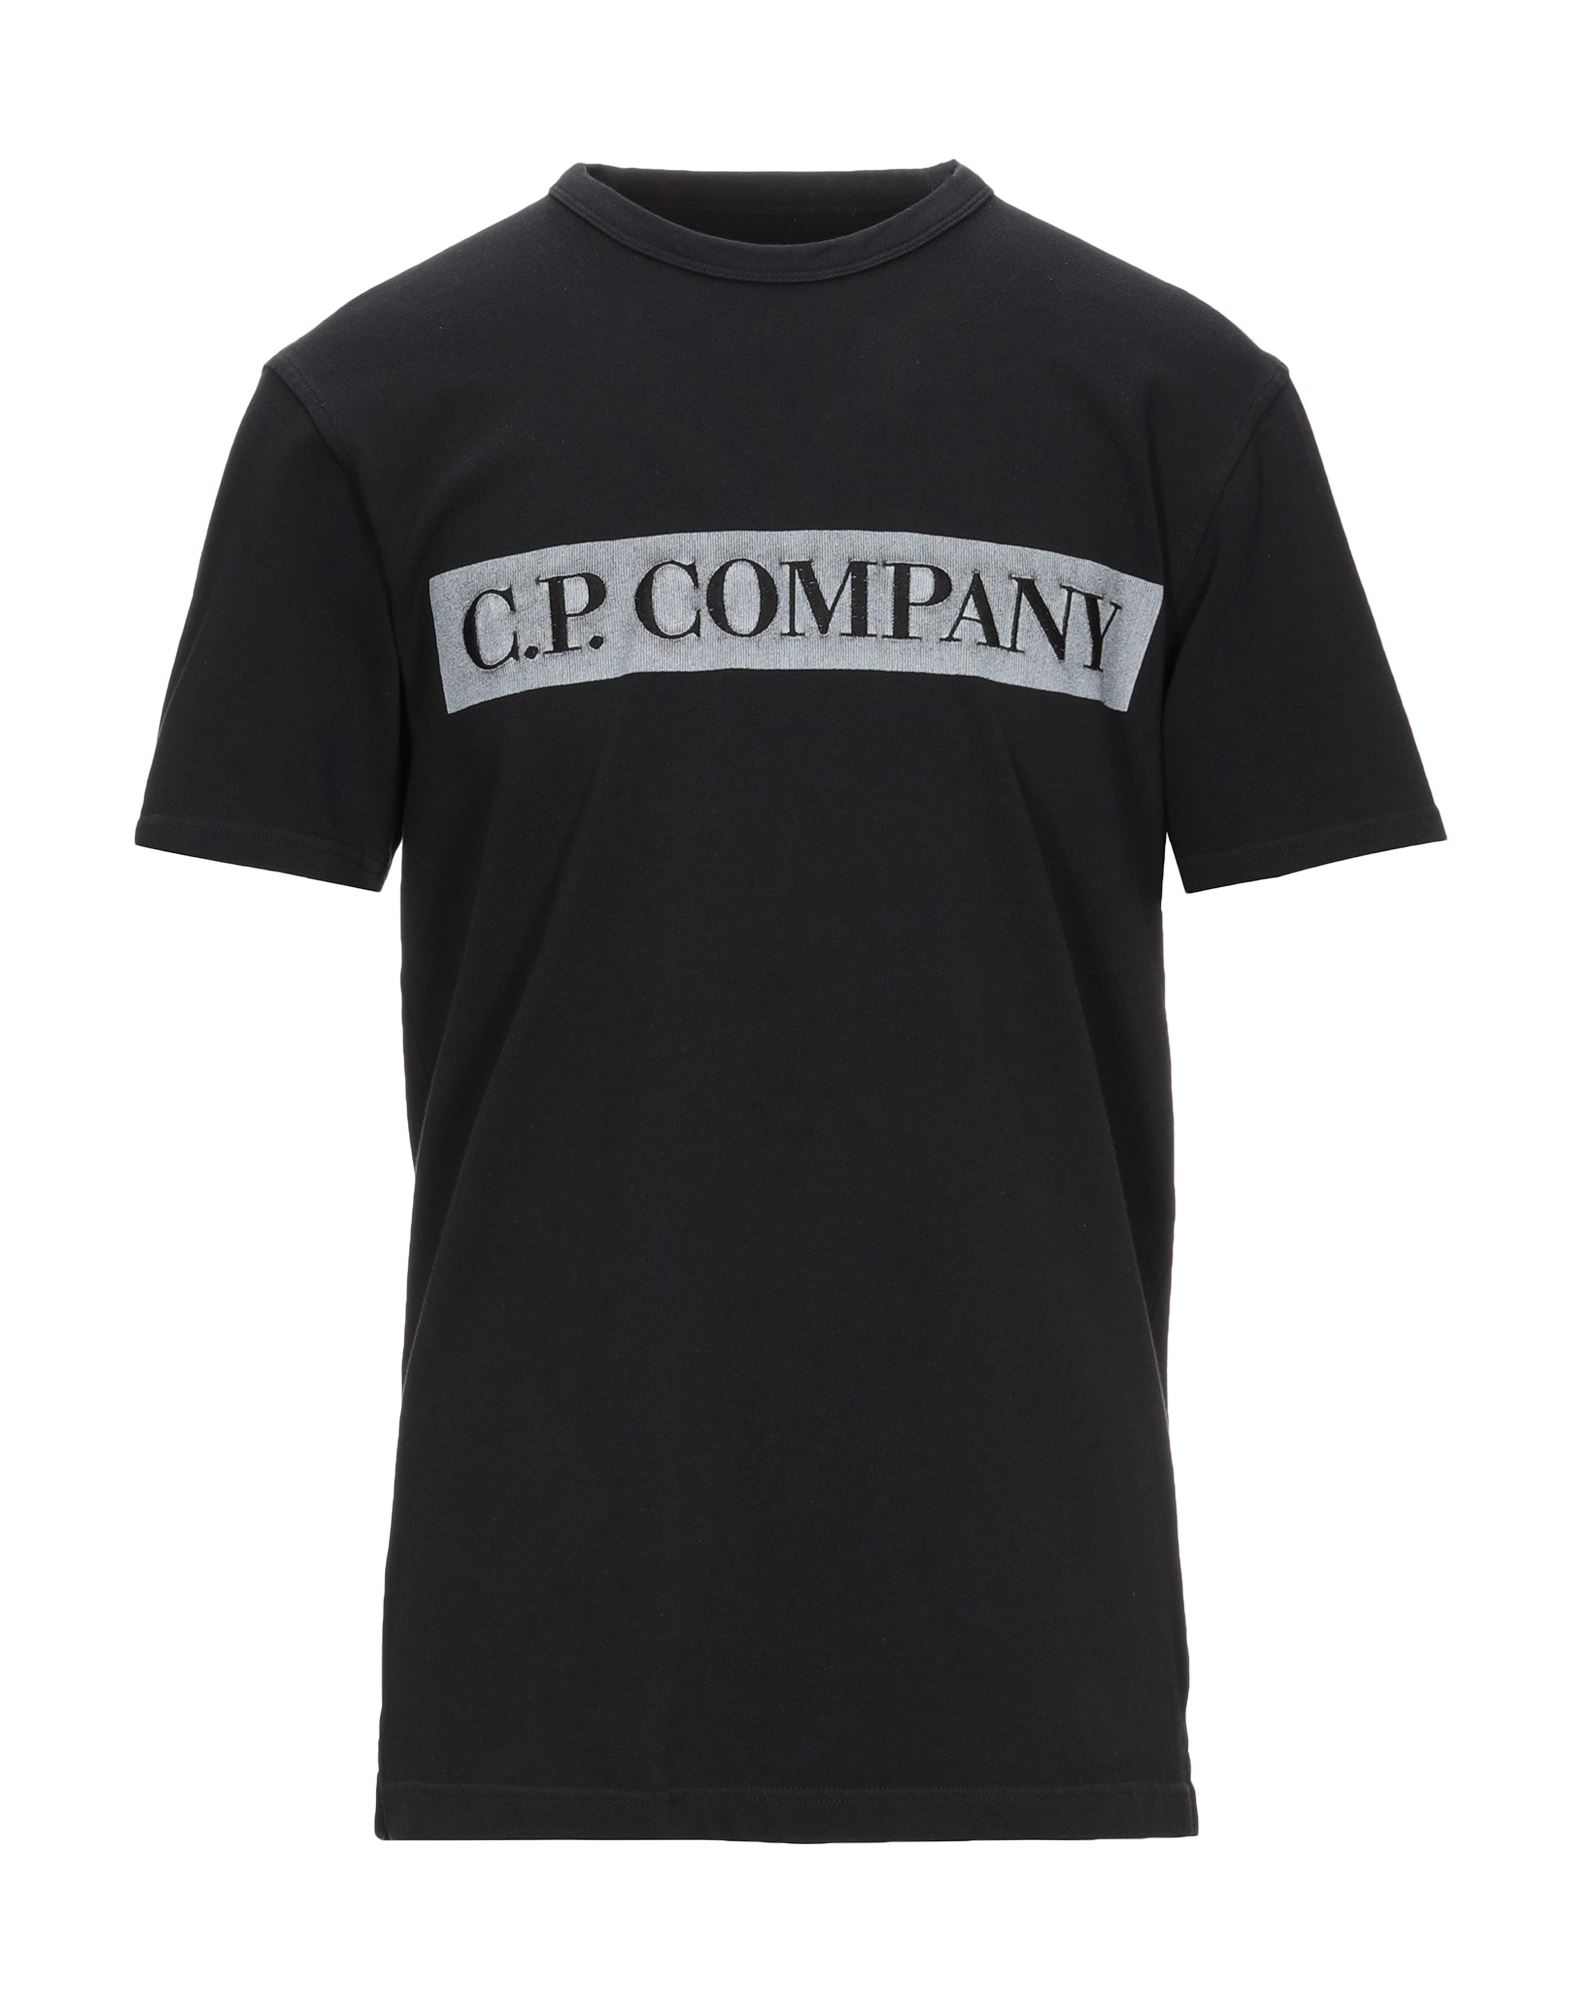 C.P. COMPANY T-shirts - Item 12516450